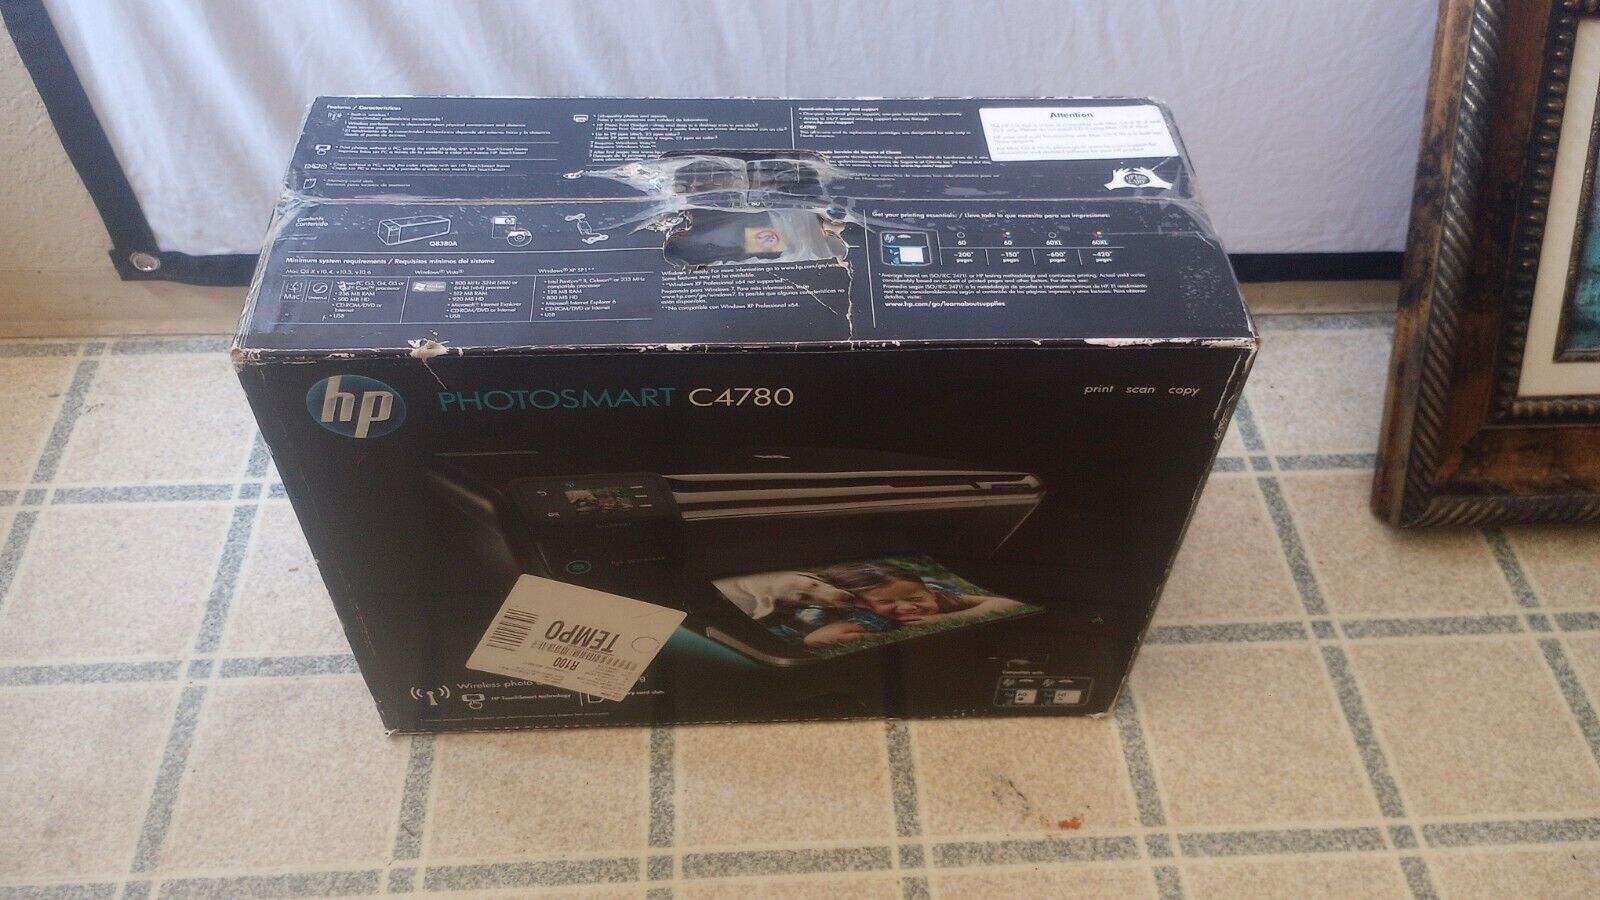 Best Deal New HP Photosmart C4780 Inkjet Wireless Photo Printer, Clean Home